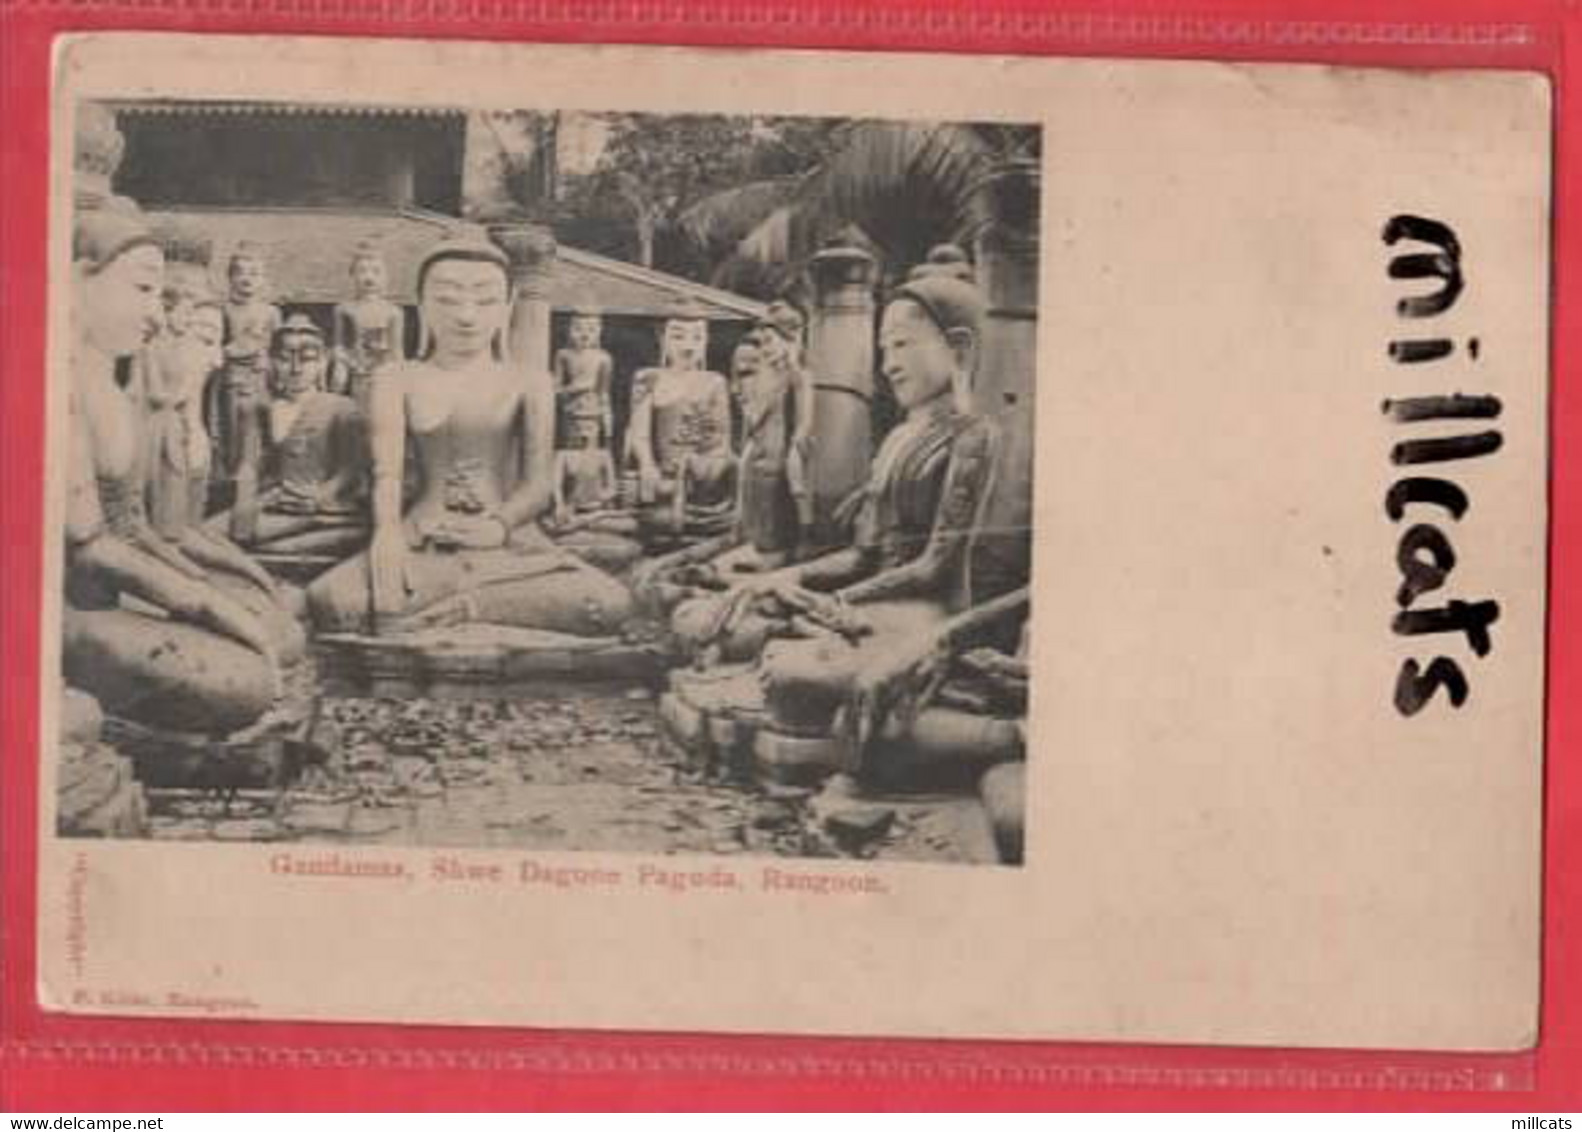 MYANMAR   BURMA   RANGOON GAUDAMAS SHWE DAGONE PAGODA   RELIGION  BUDDHISM - Myanmar (Burma)